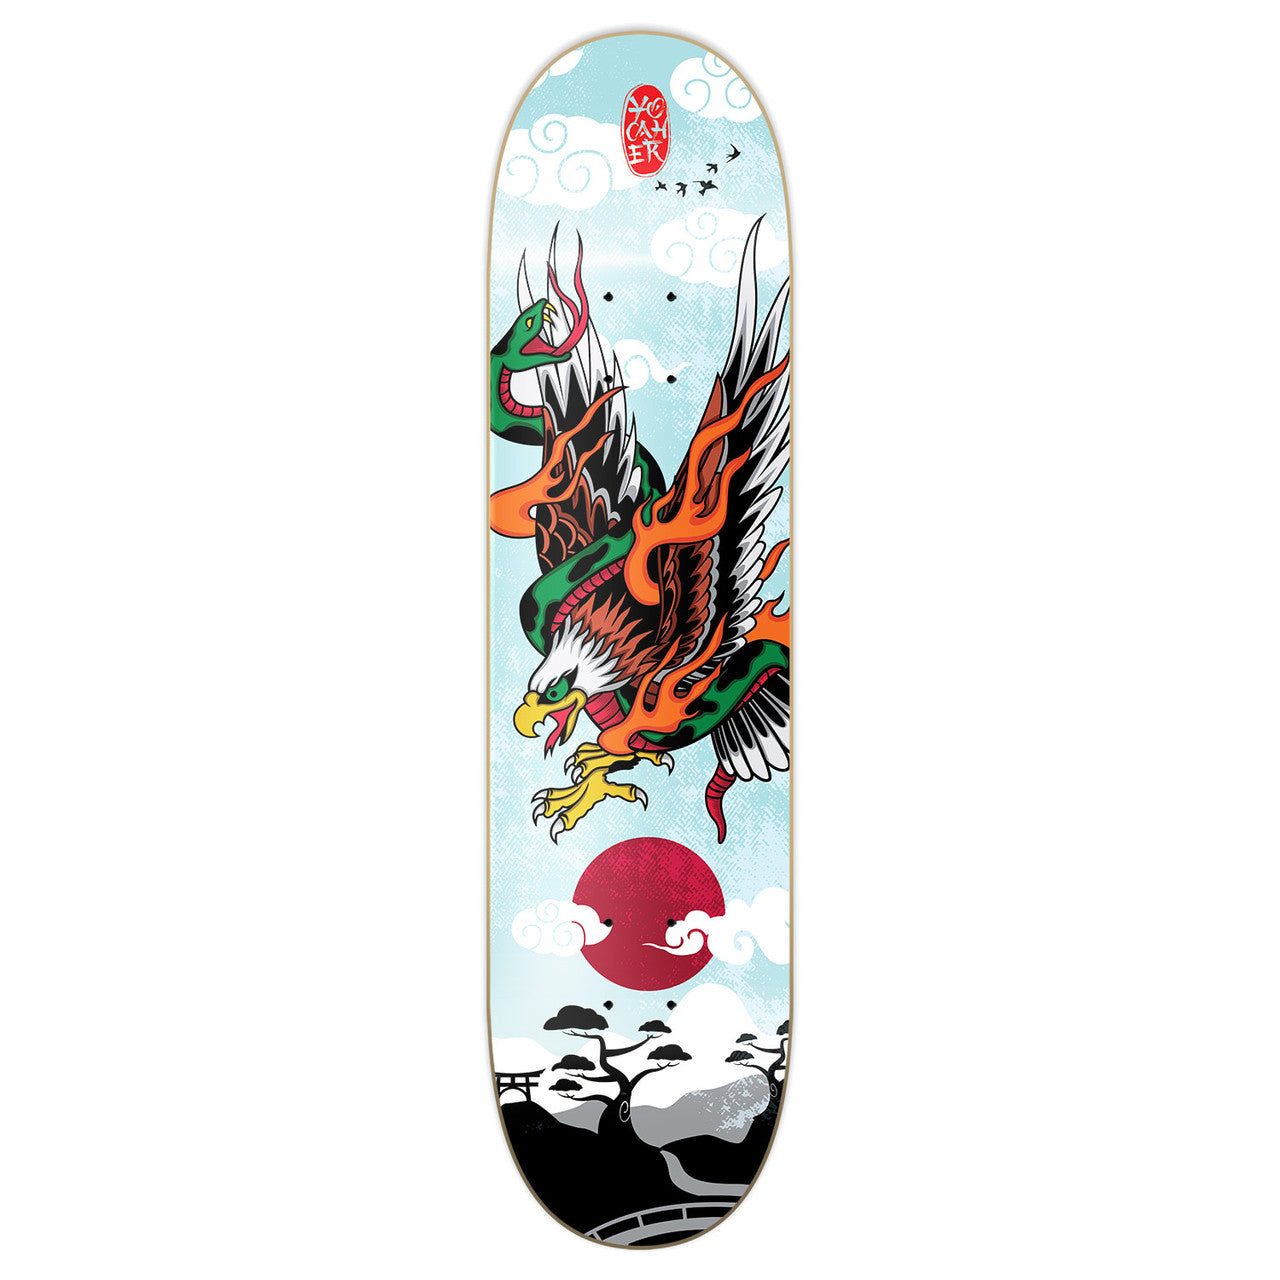 Yocaher Graphic Skateboard Deck  - Eagle Viper